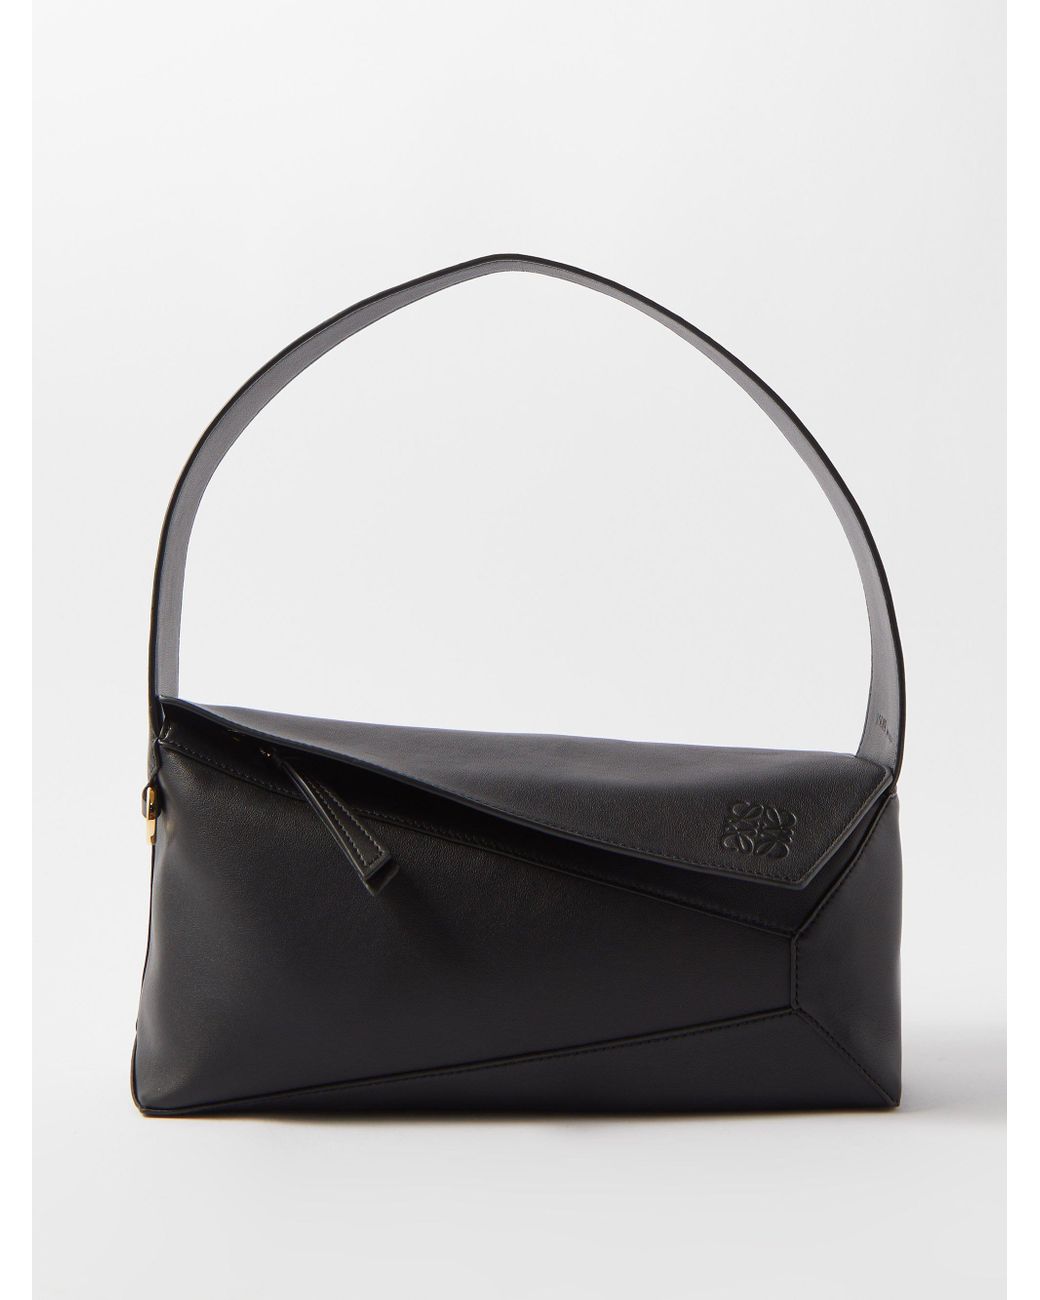 Loewe Puzzle Hobo Leather Shoulder Bag in Black | Lyst